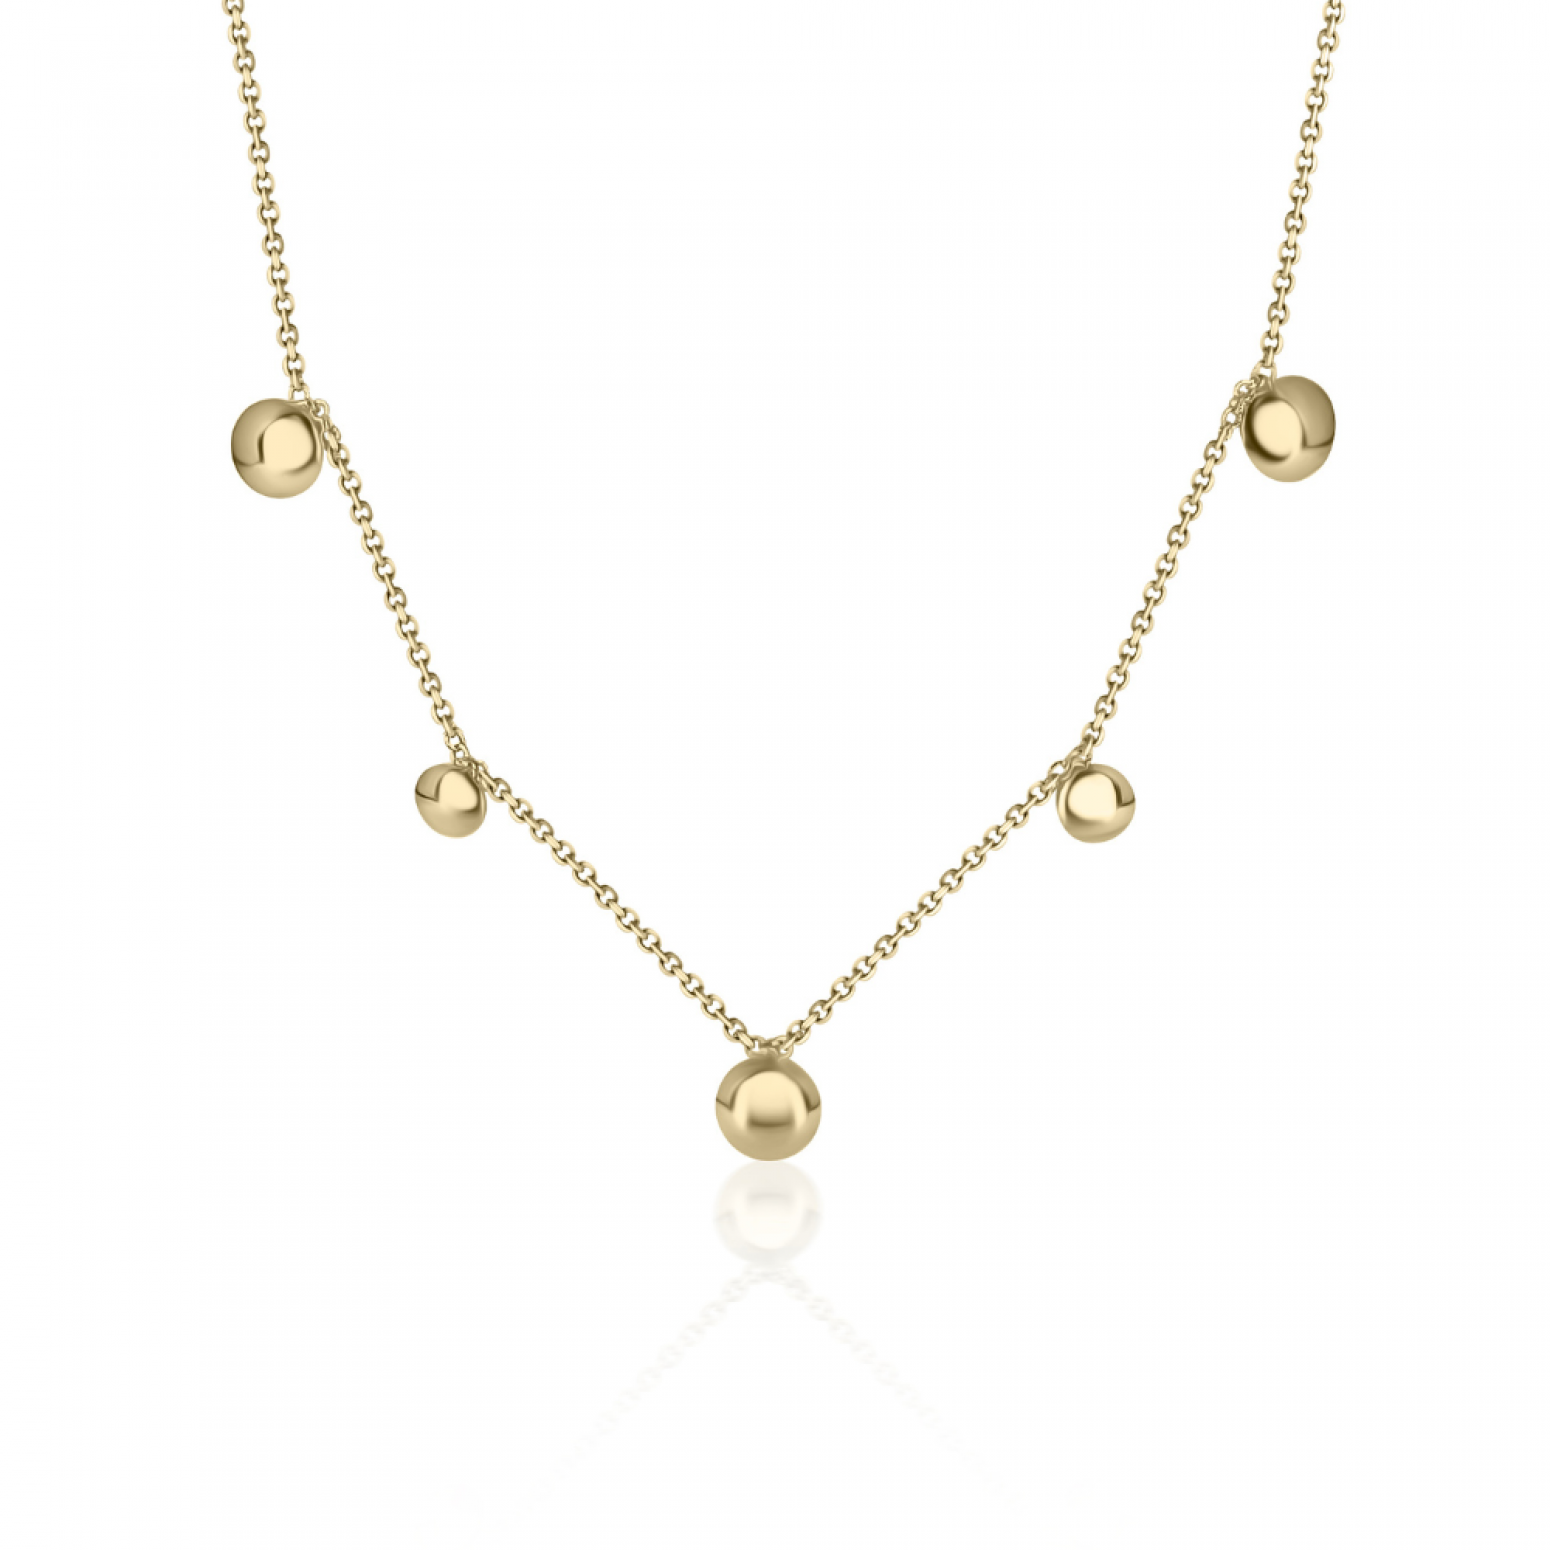 Round necklace, Κ14 gold, ko5929 NECKLACES Κοσμηματα - chrilia.gr